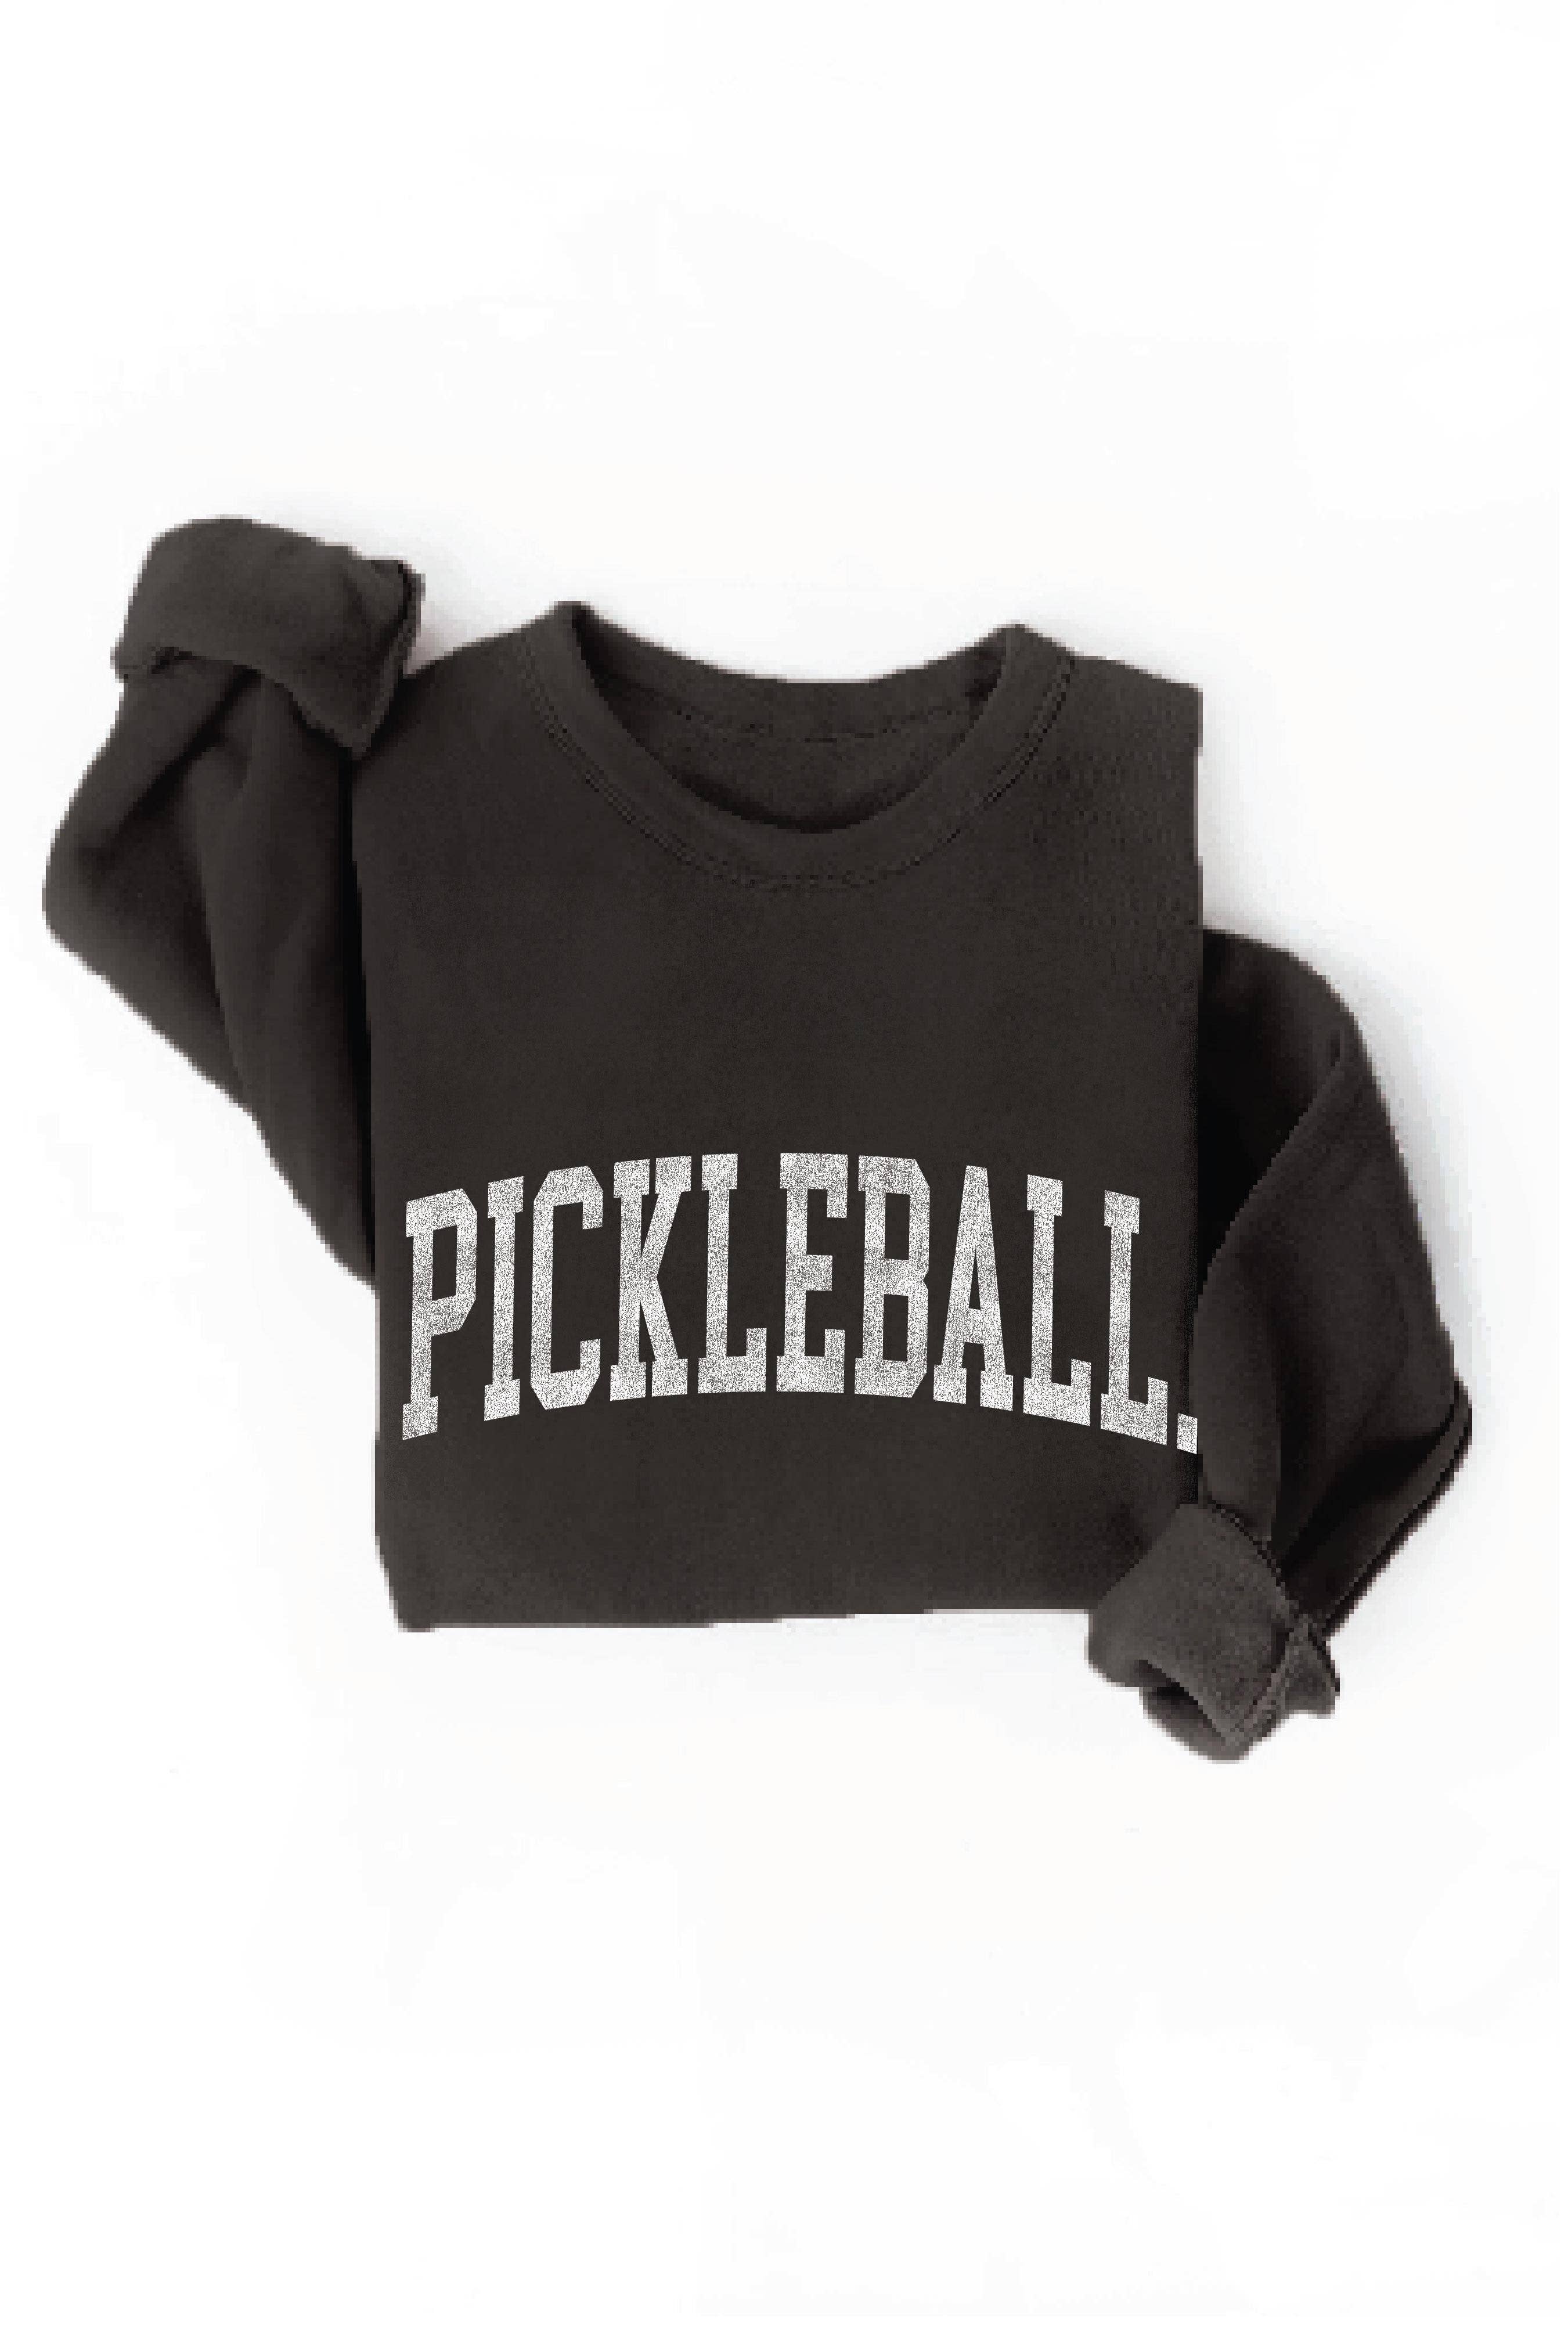 PICKLEBALL Graphic Sweatshirt: M / ROSE